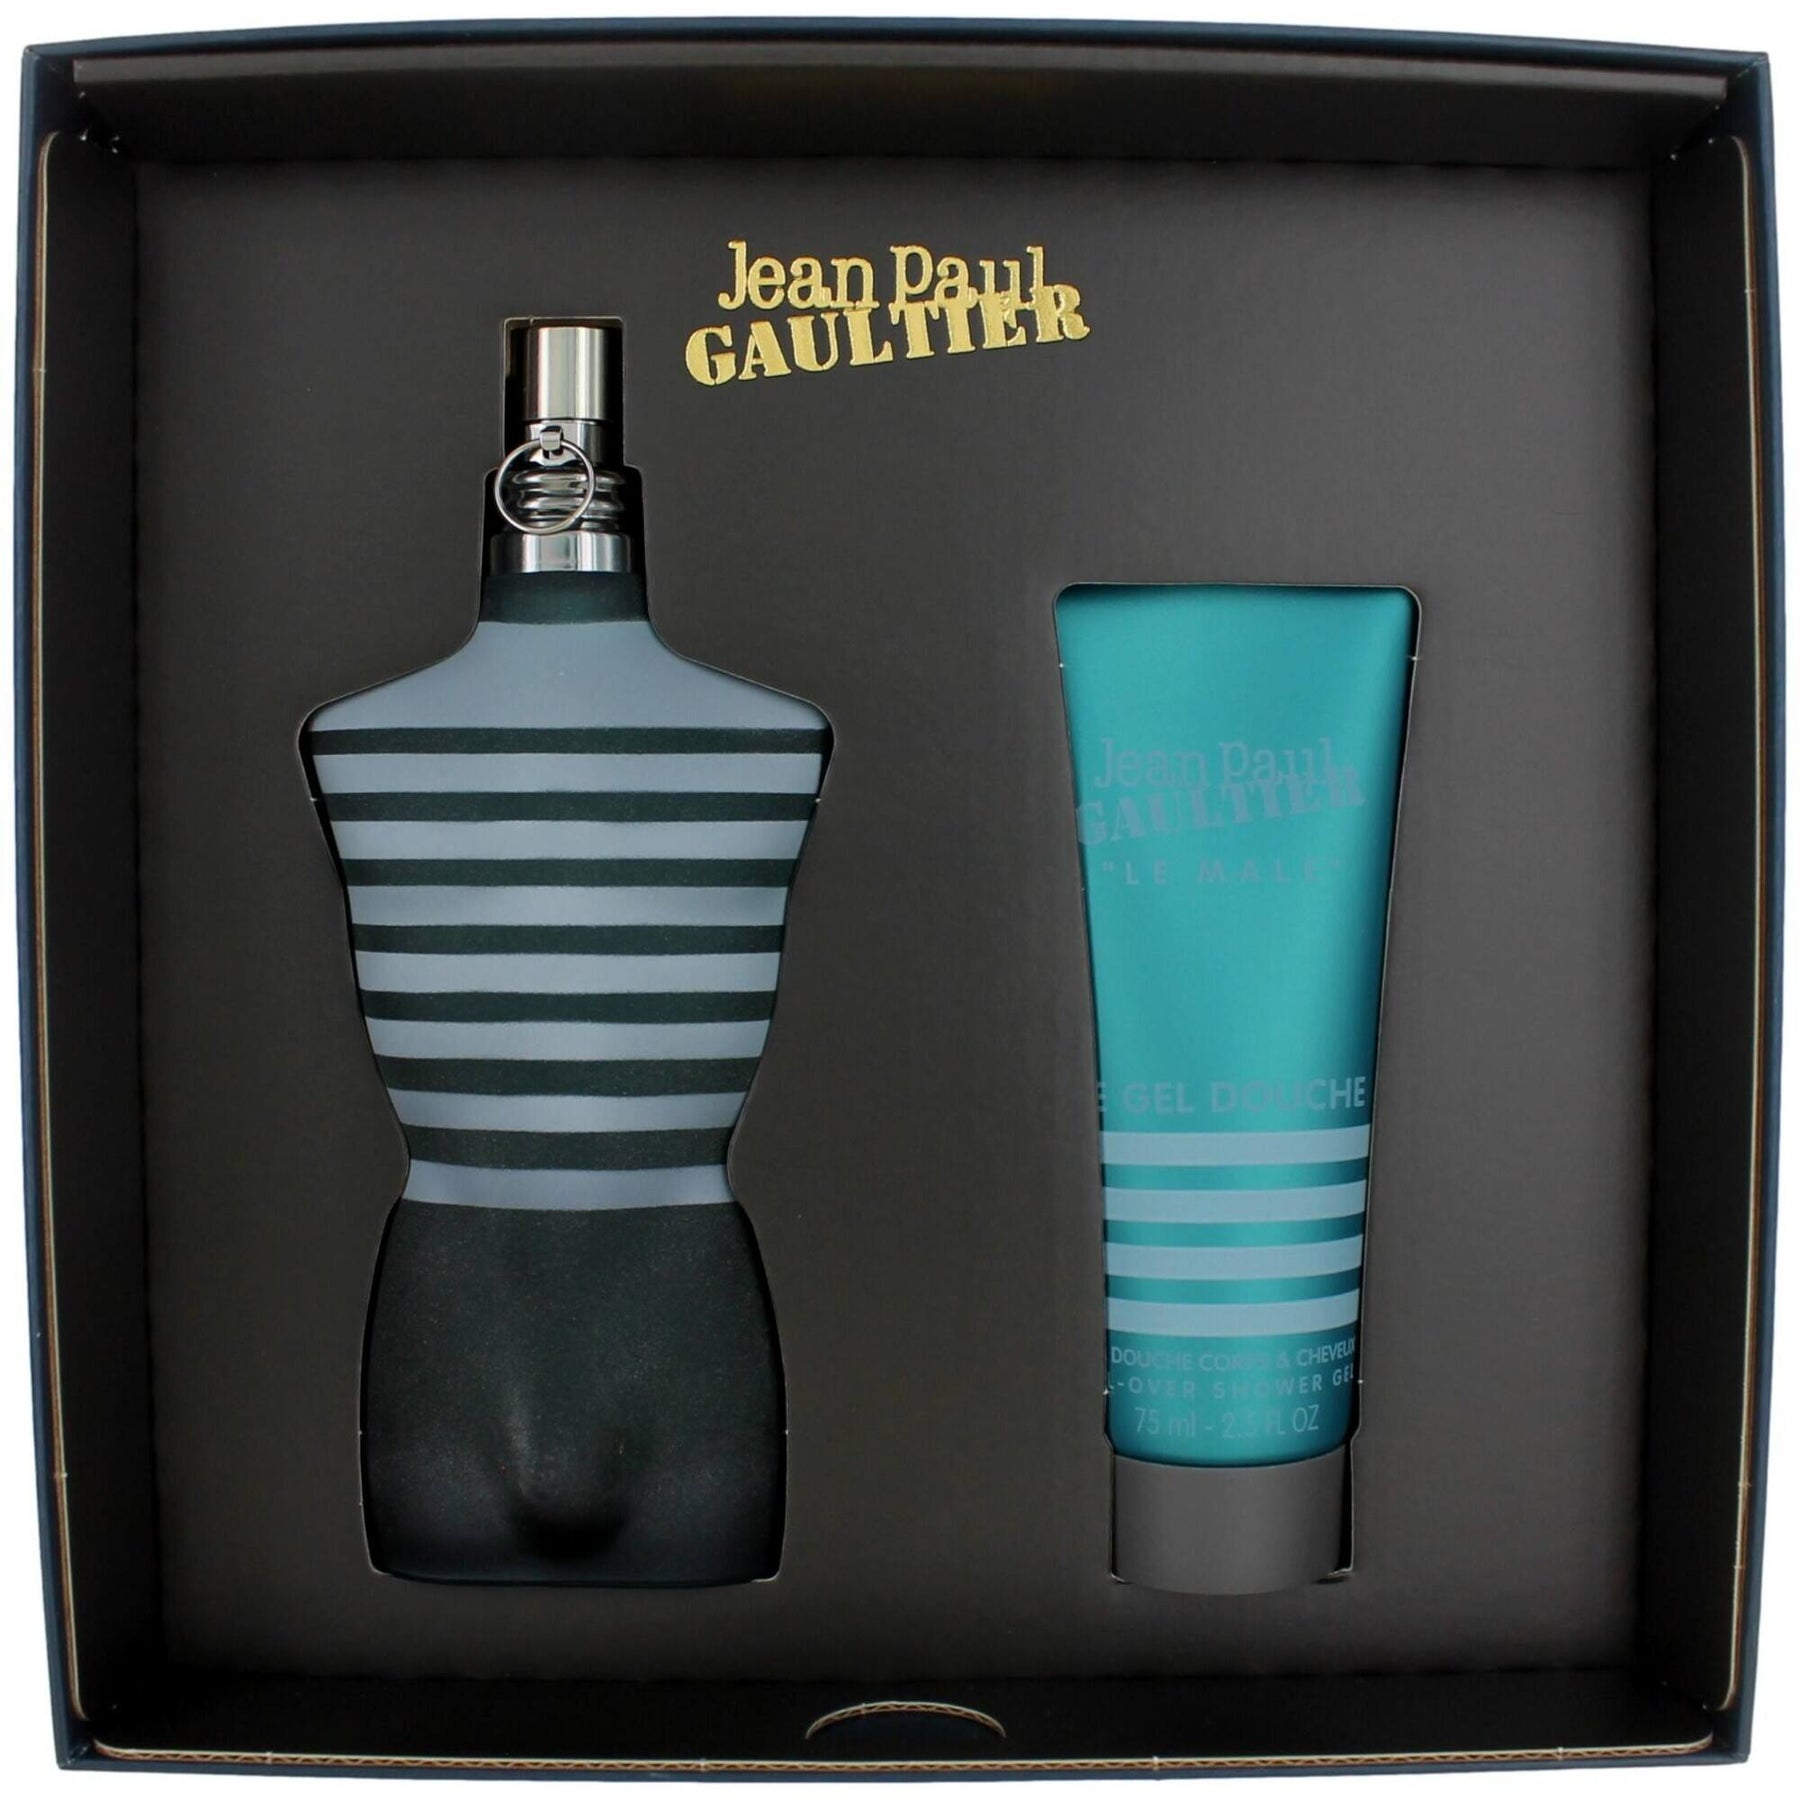 Jean Paul Gaultier Men's Personal Care Gift Set - Le Male Enticing Sce